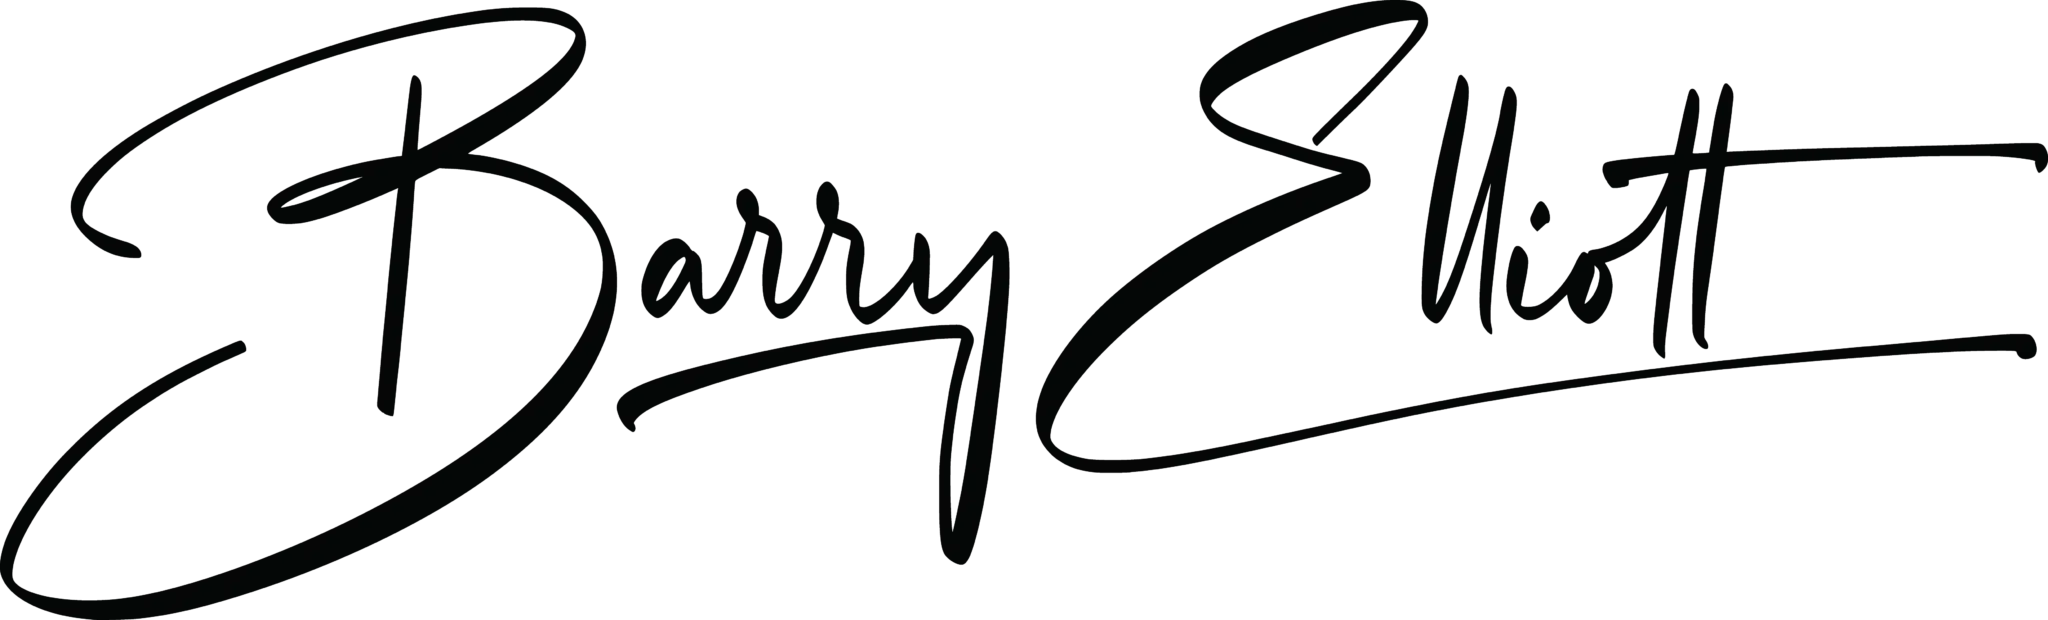 Barry Elliott signature